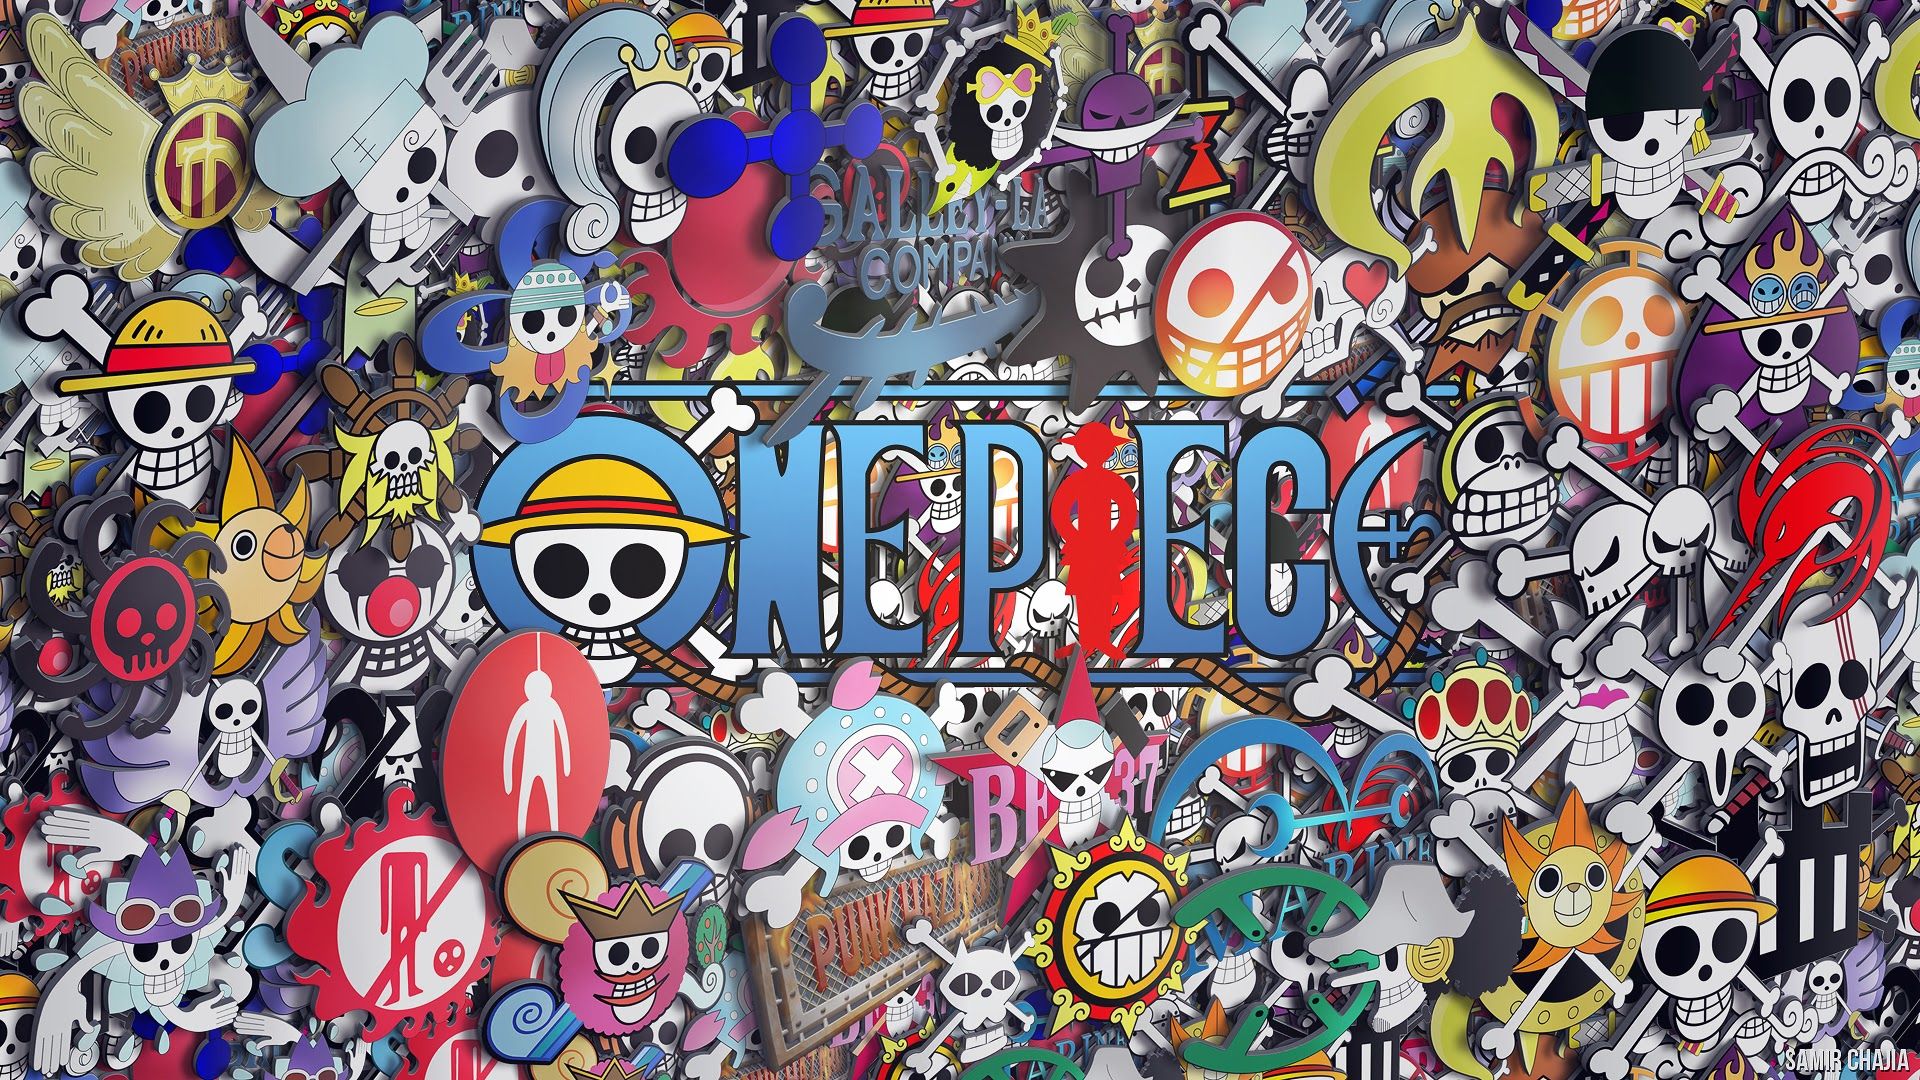 One Piece Crew Wallpaper